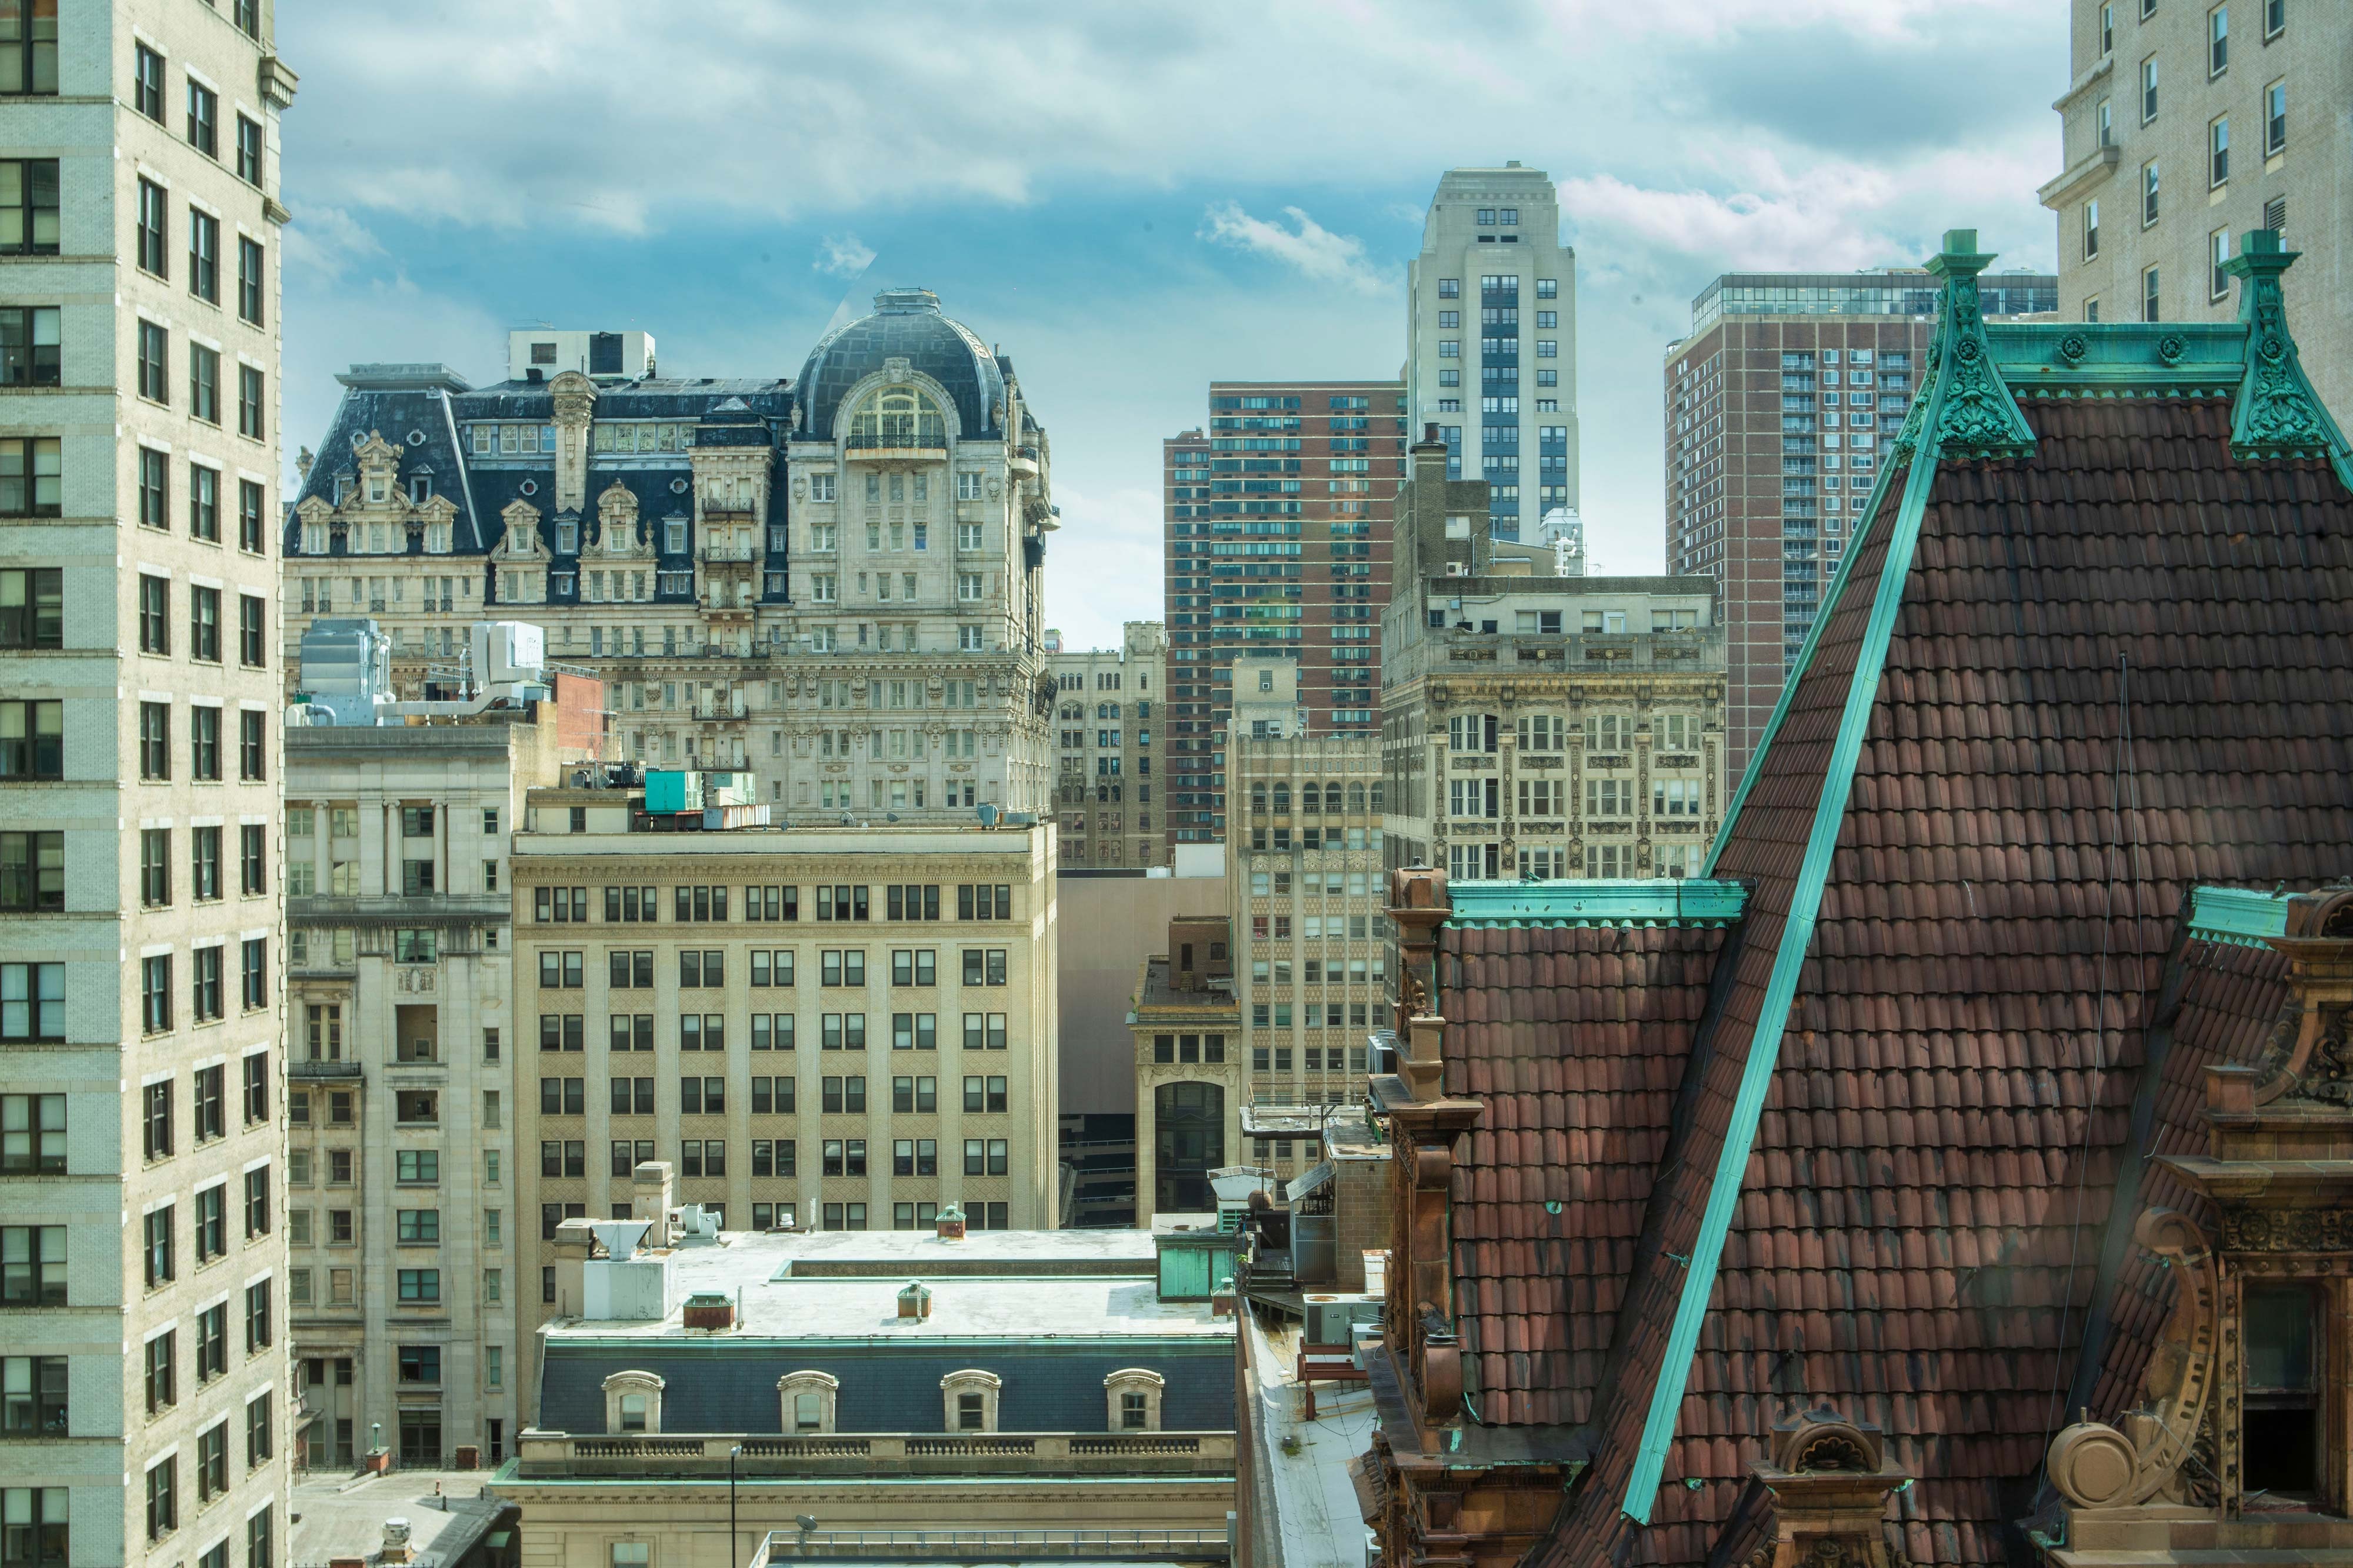 Views of Philadelphia's historic architecture